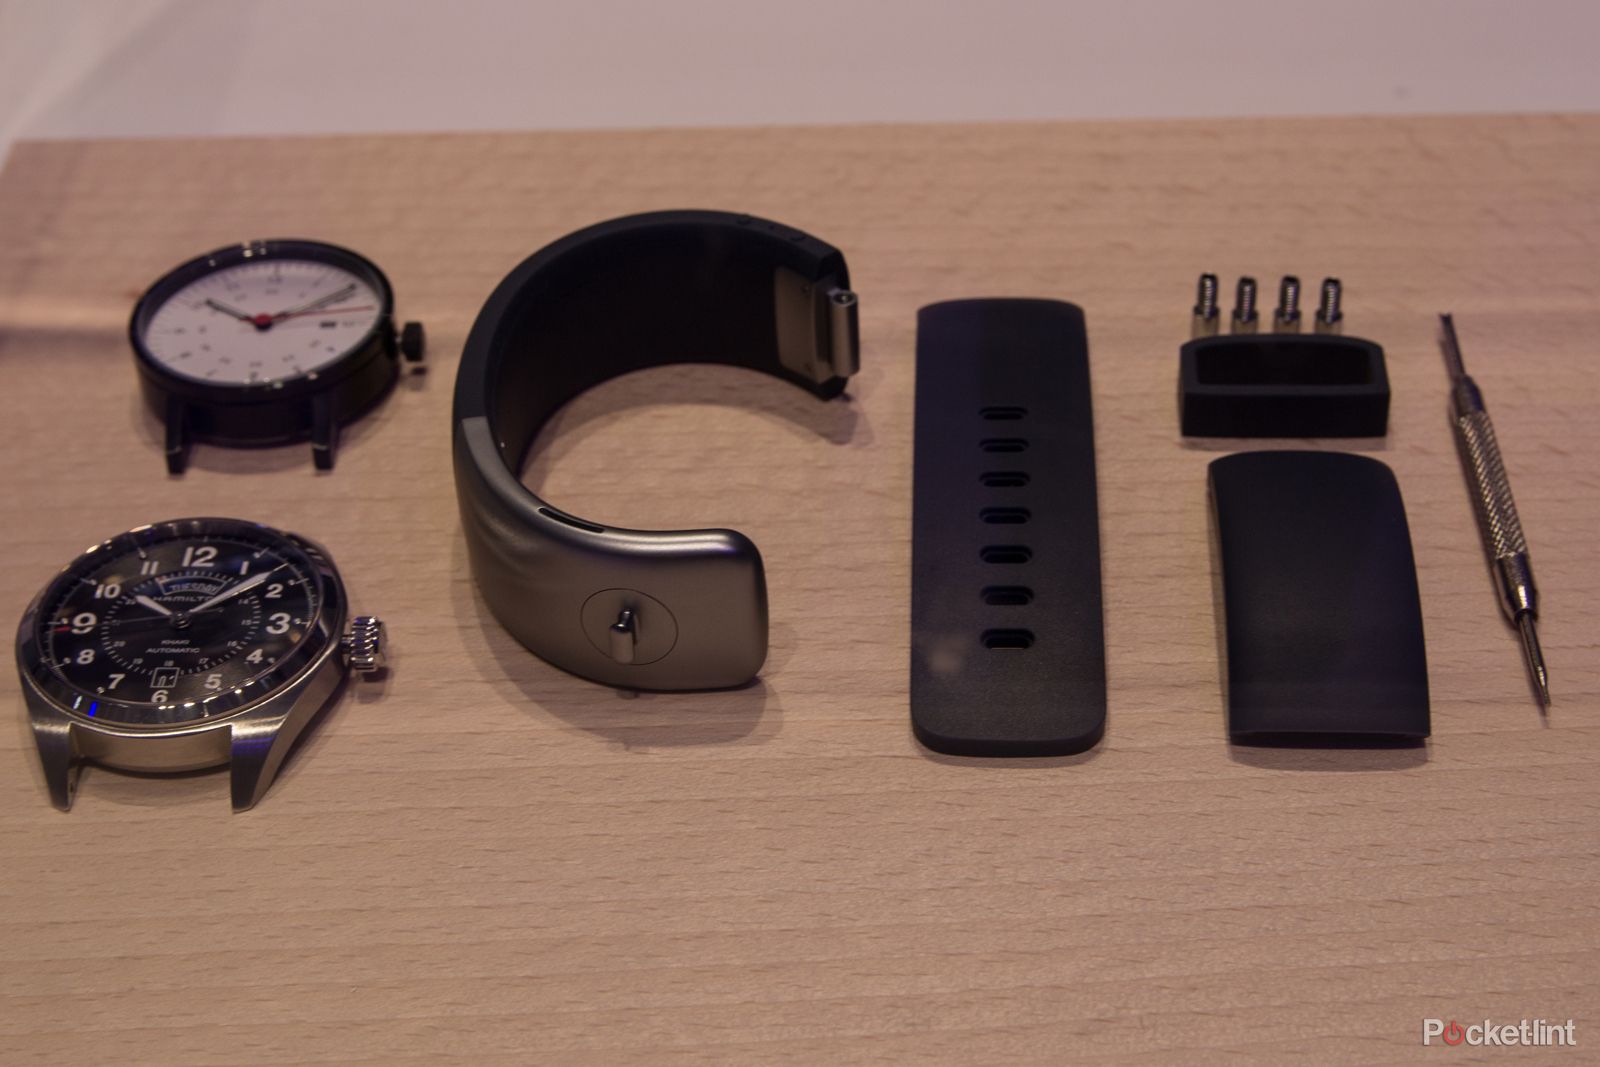 sgnl smart watch strap will let you make calls using your fingertip like james bond image 1